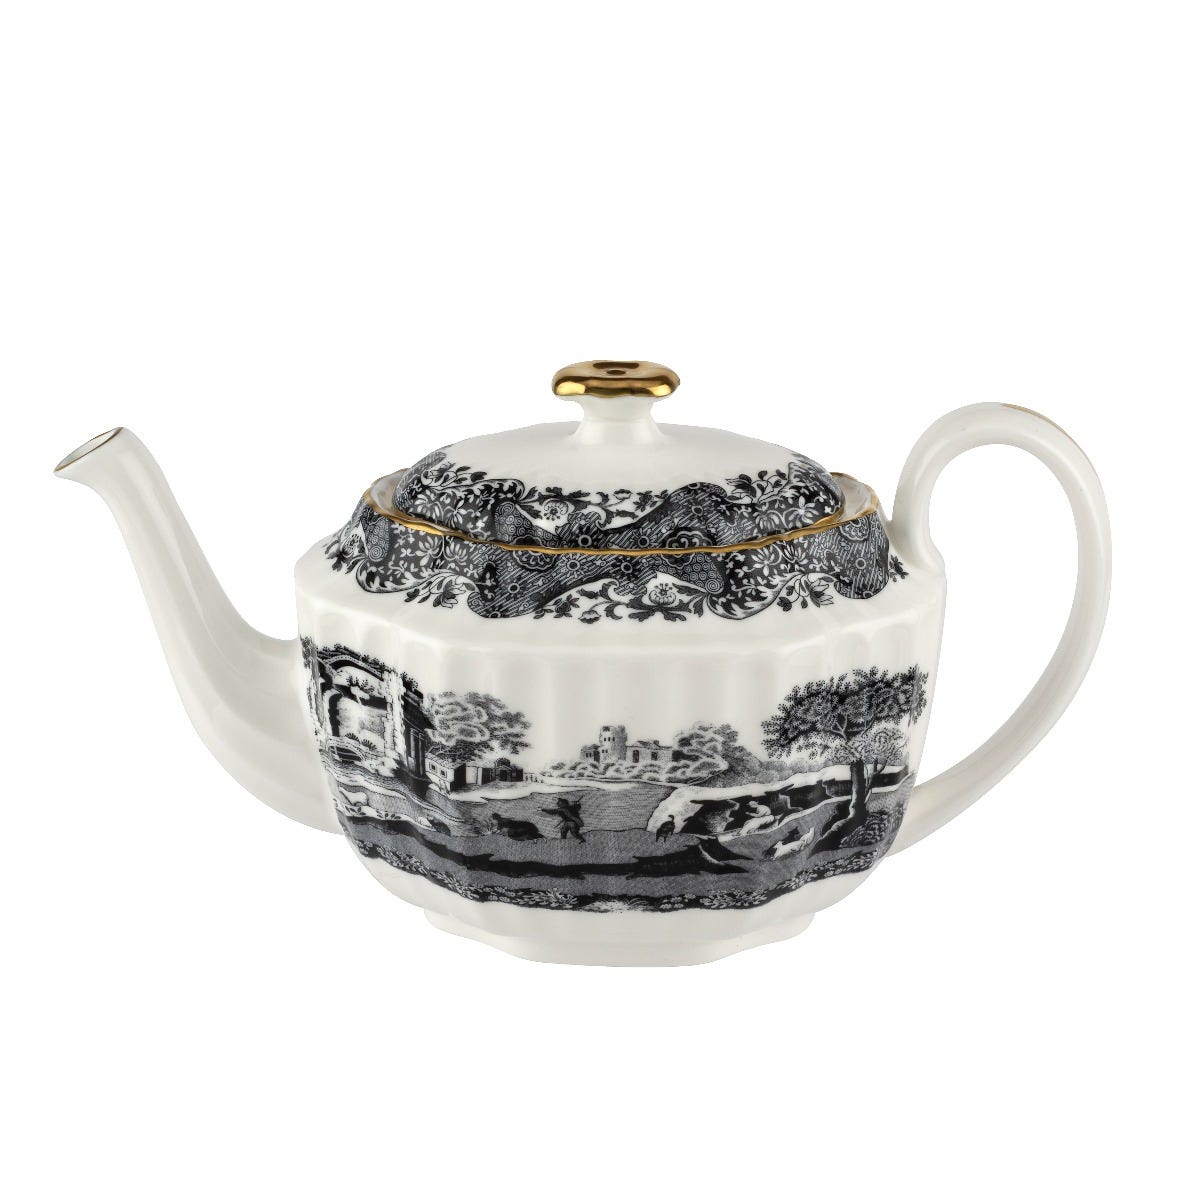 1770 Italian Teapot in Black, Small, Spode